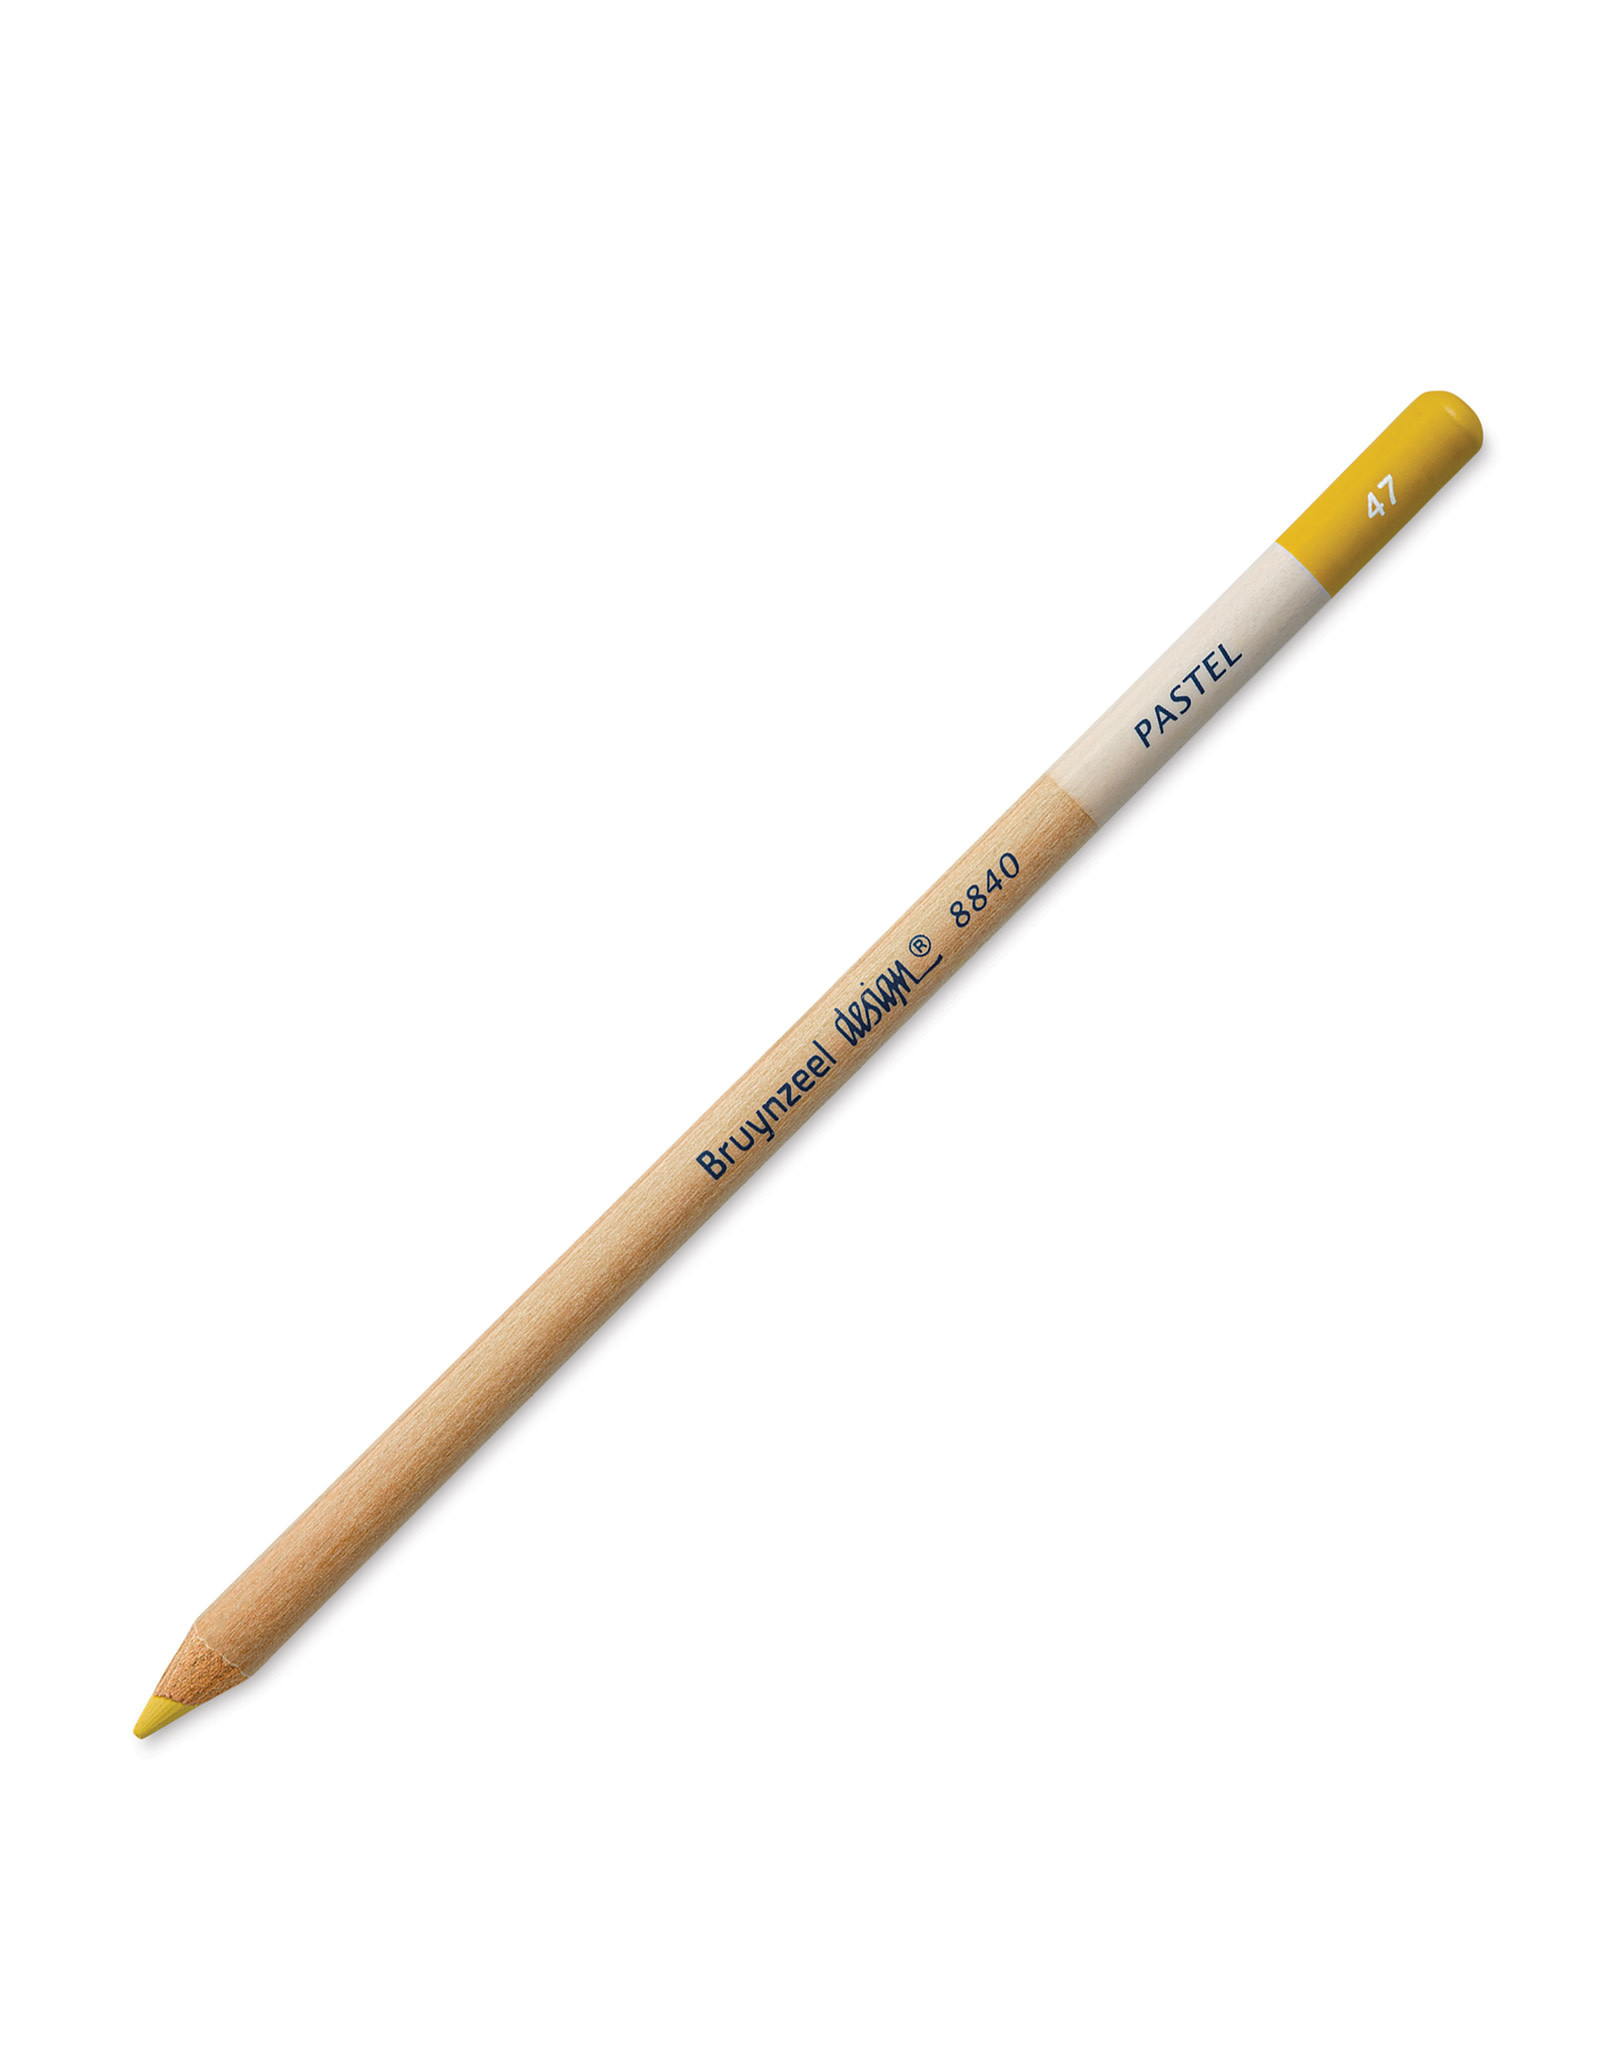 Royal Talens Bruynzeel Design Pastel Pencil, Raw Sienna